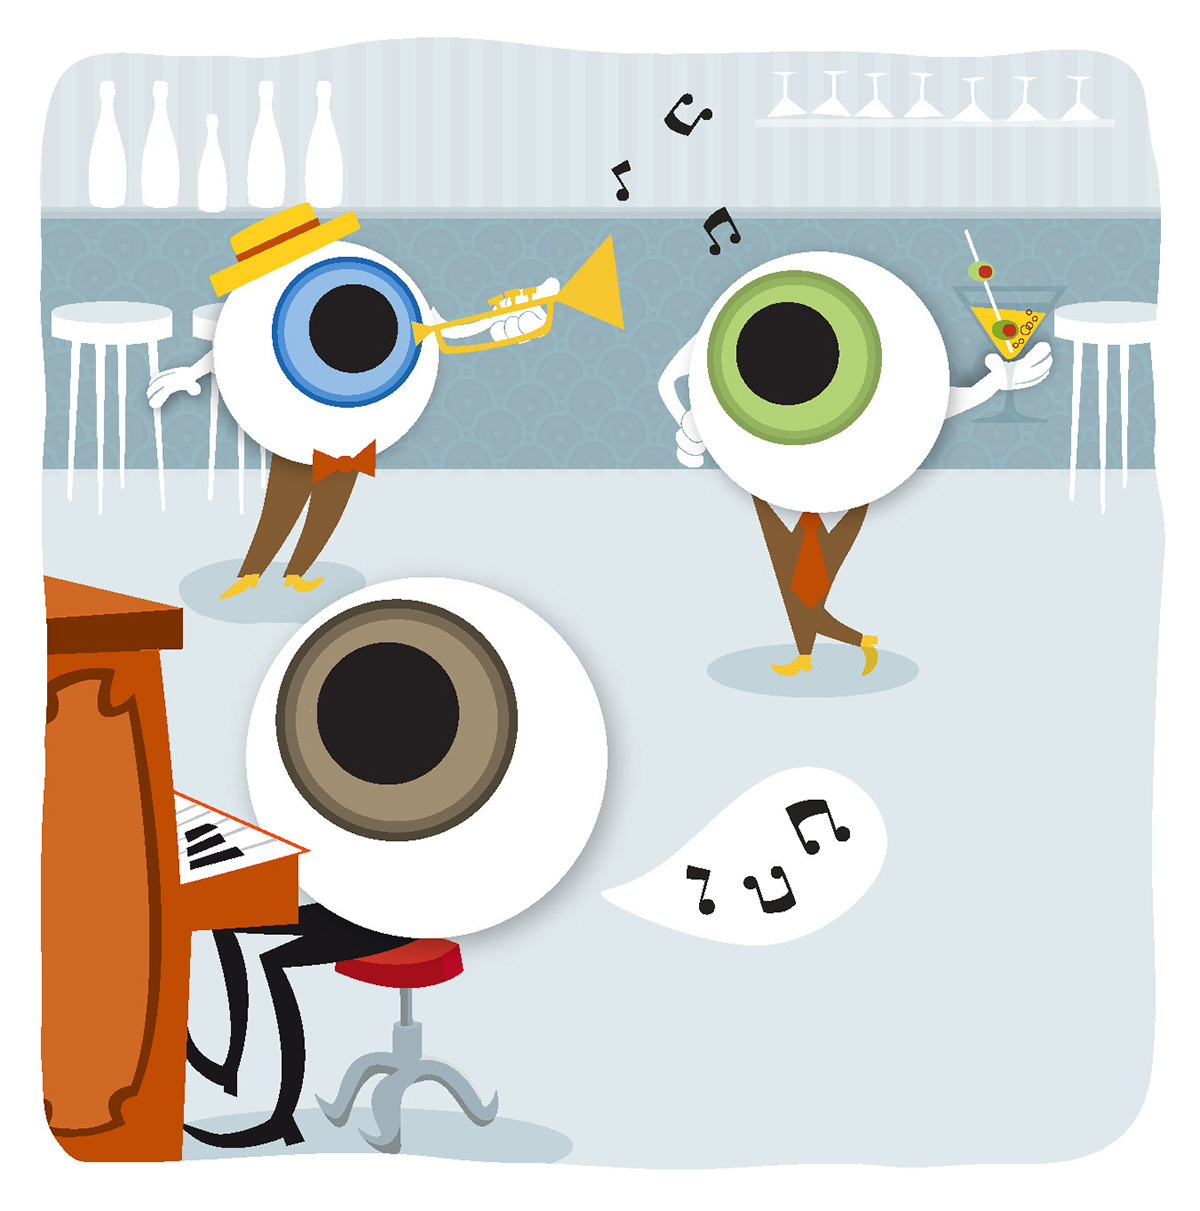 ilustration ilustracion Oftalmologia oftalmologo eye ojo Character dibujo Illustrator bilbao pintxo puppy cartoon Simposio ophthalmologist